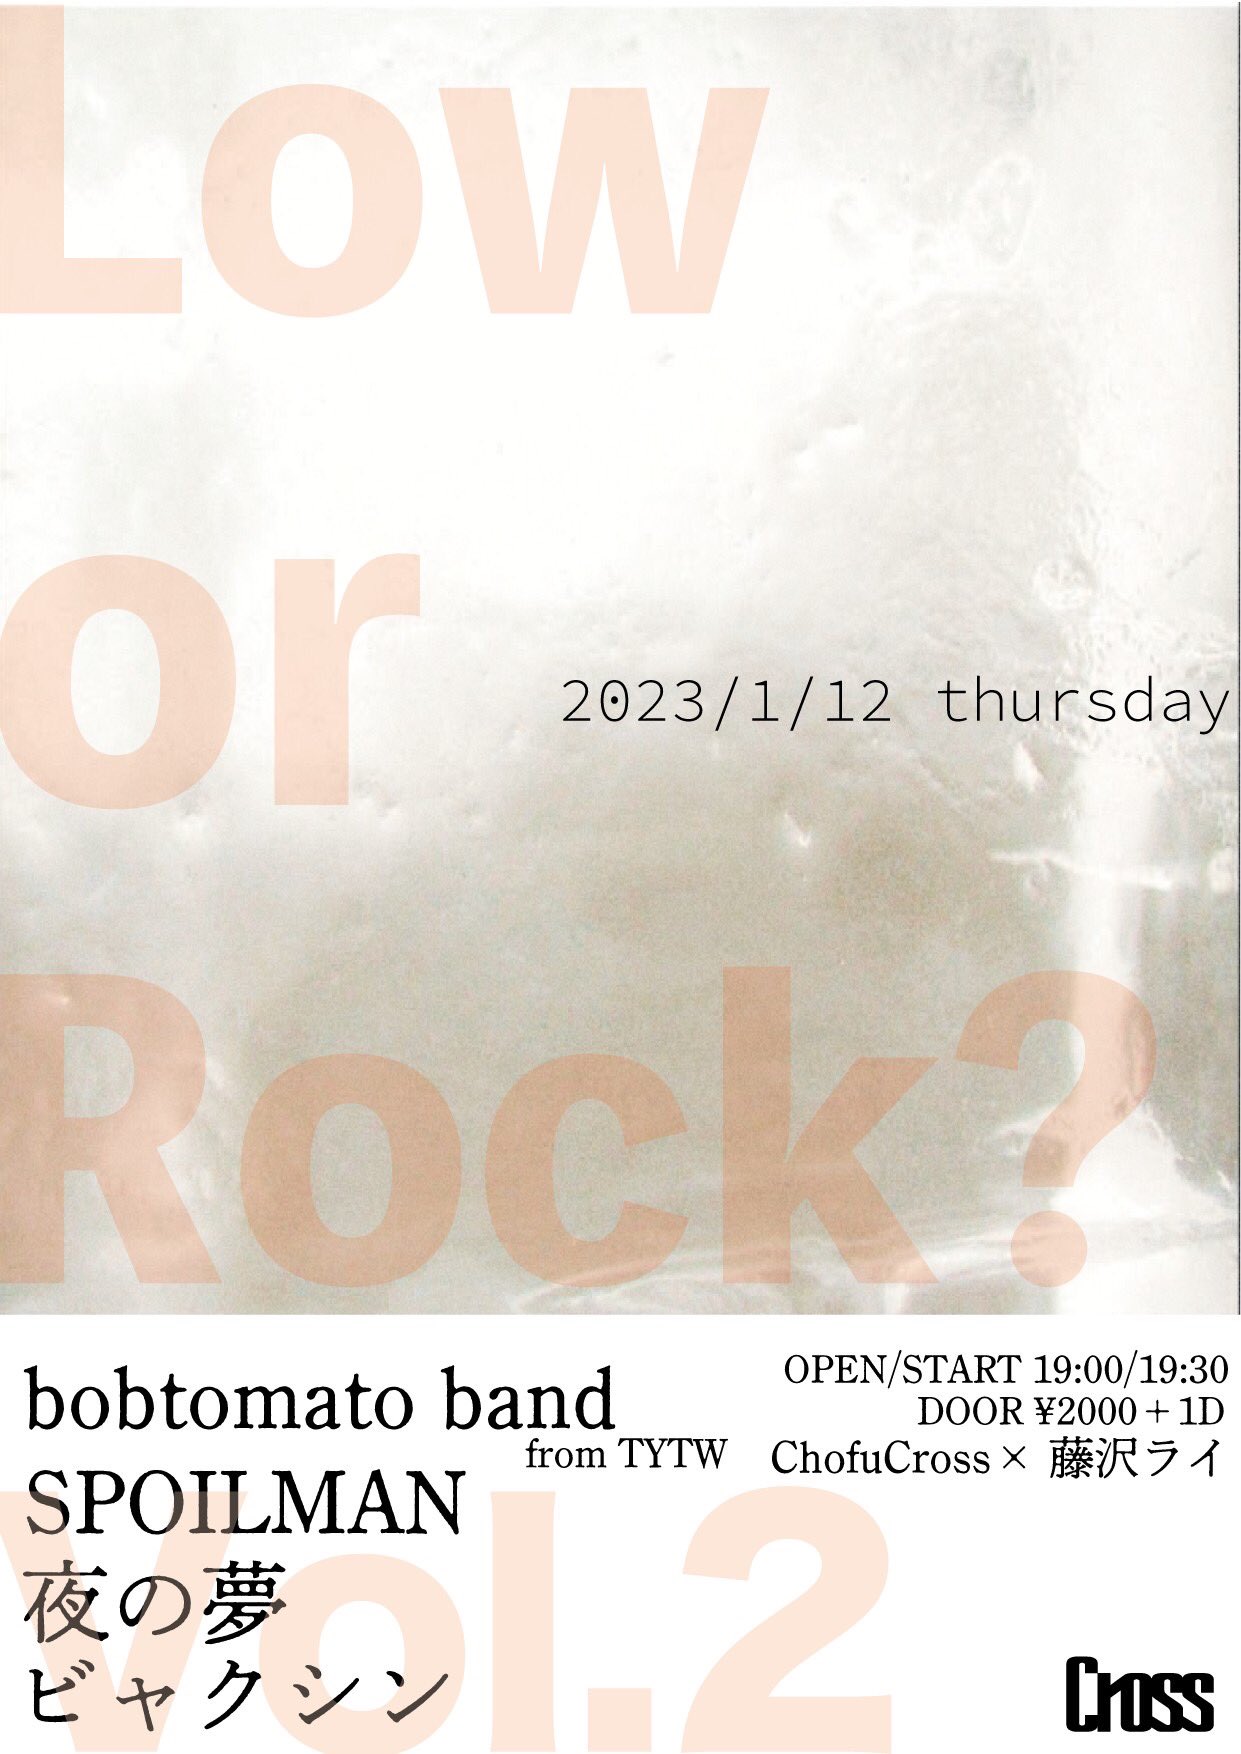 「Low or Rock? vol.2」